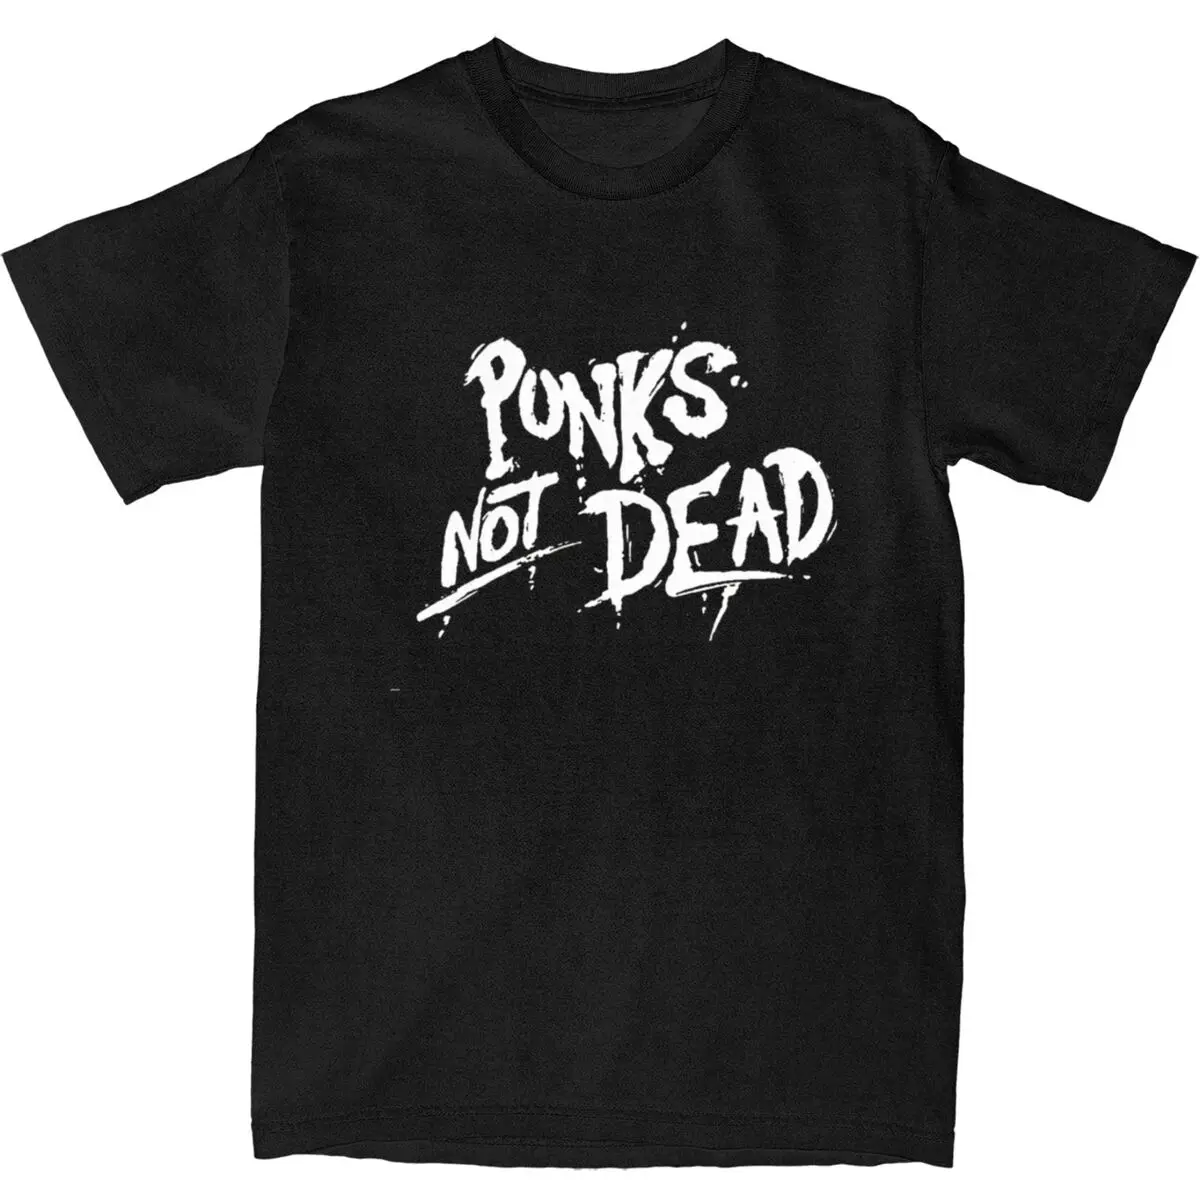 

Men Women T-Shirt Punks Not Dead T-Shirts Trending Rock Music Summer Tees Vintage Printed 100% Cotton Tops Plus Size